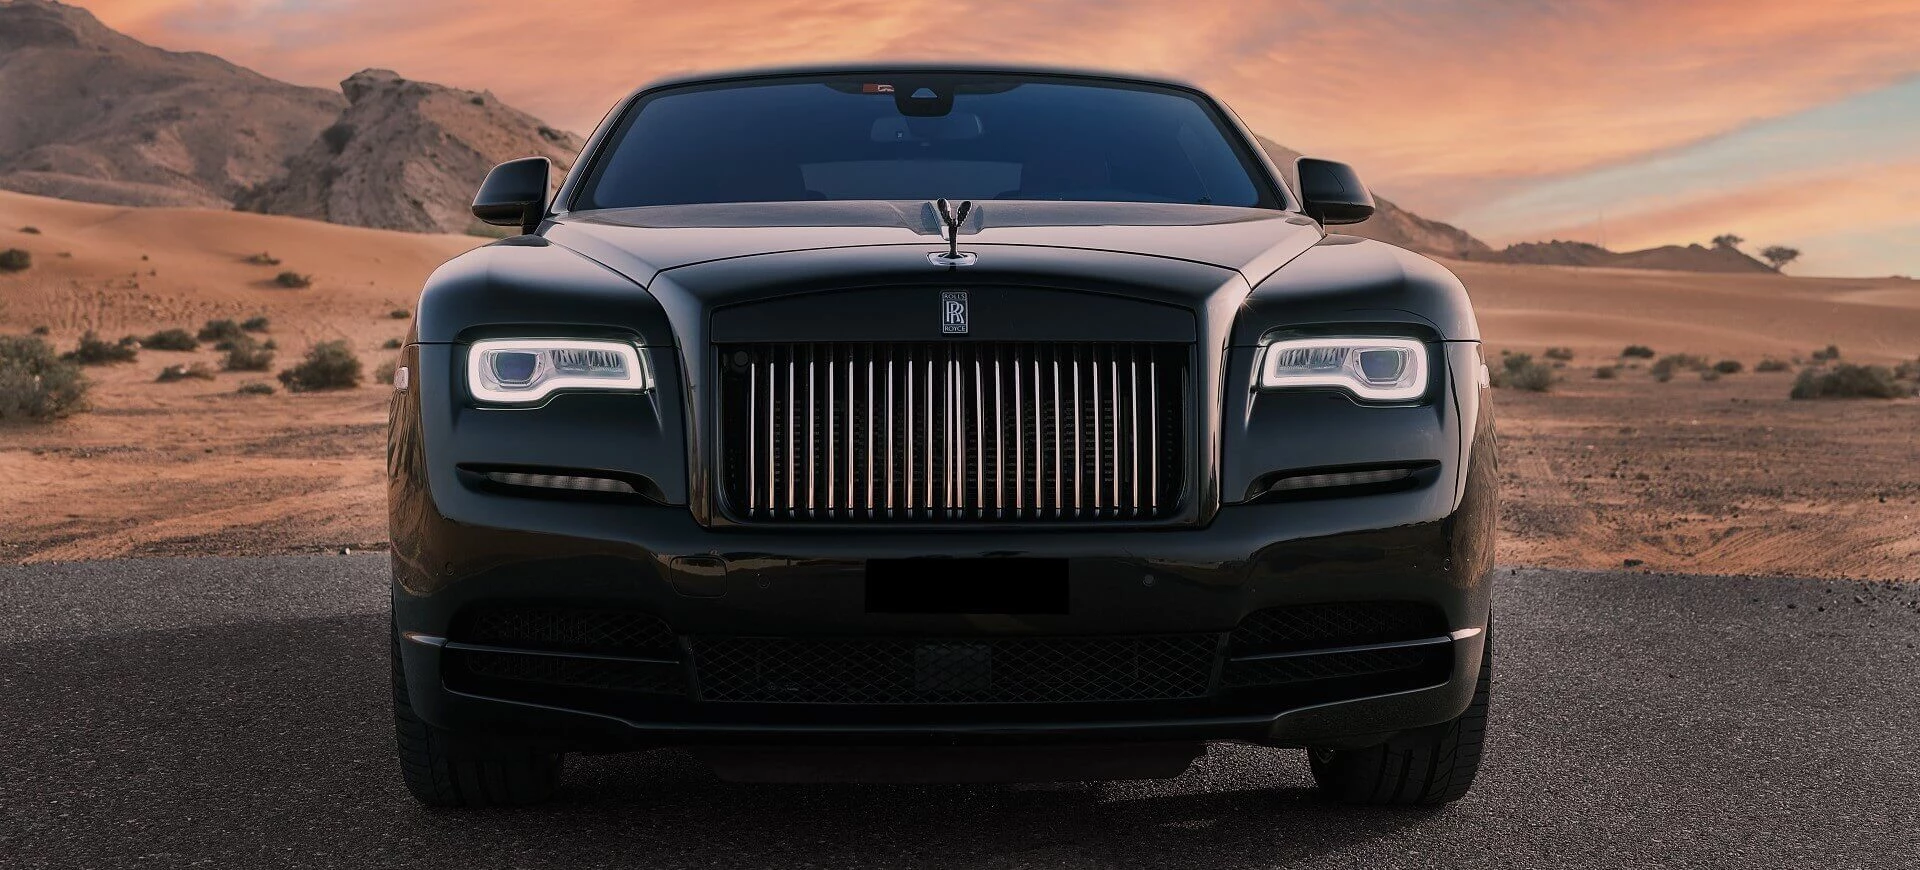 Rolls Royce Wraith Negro